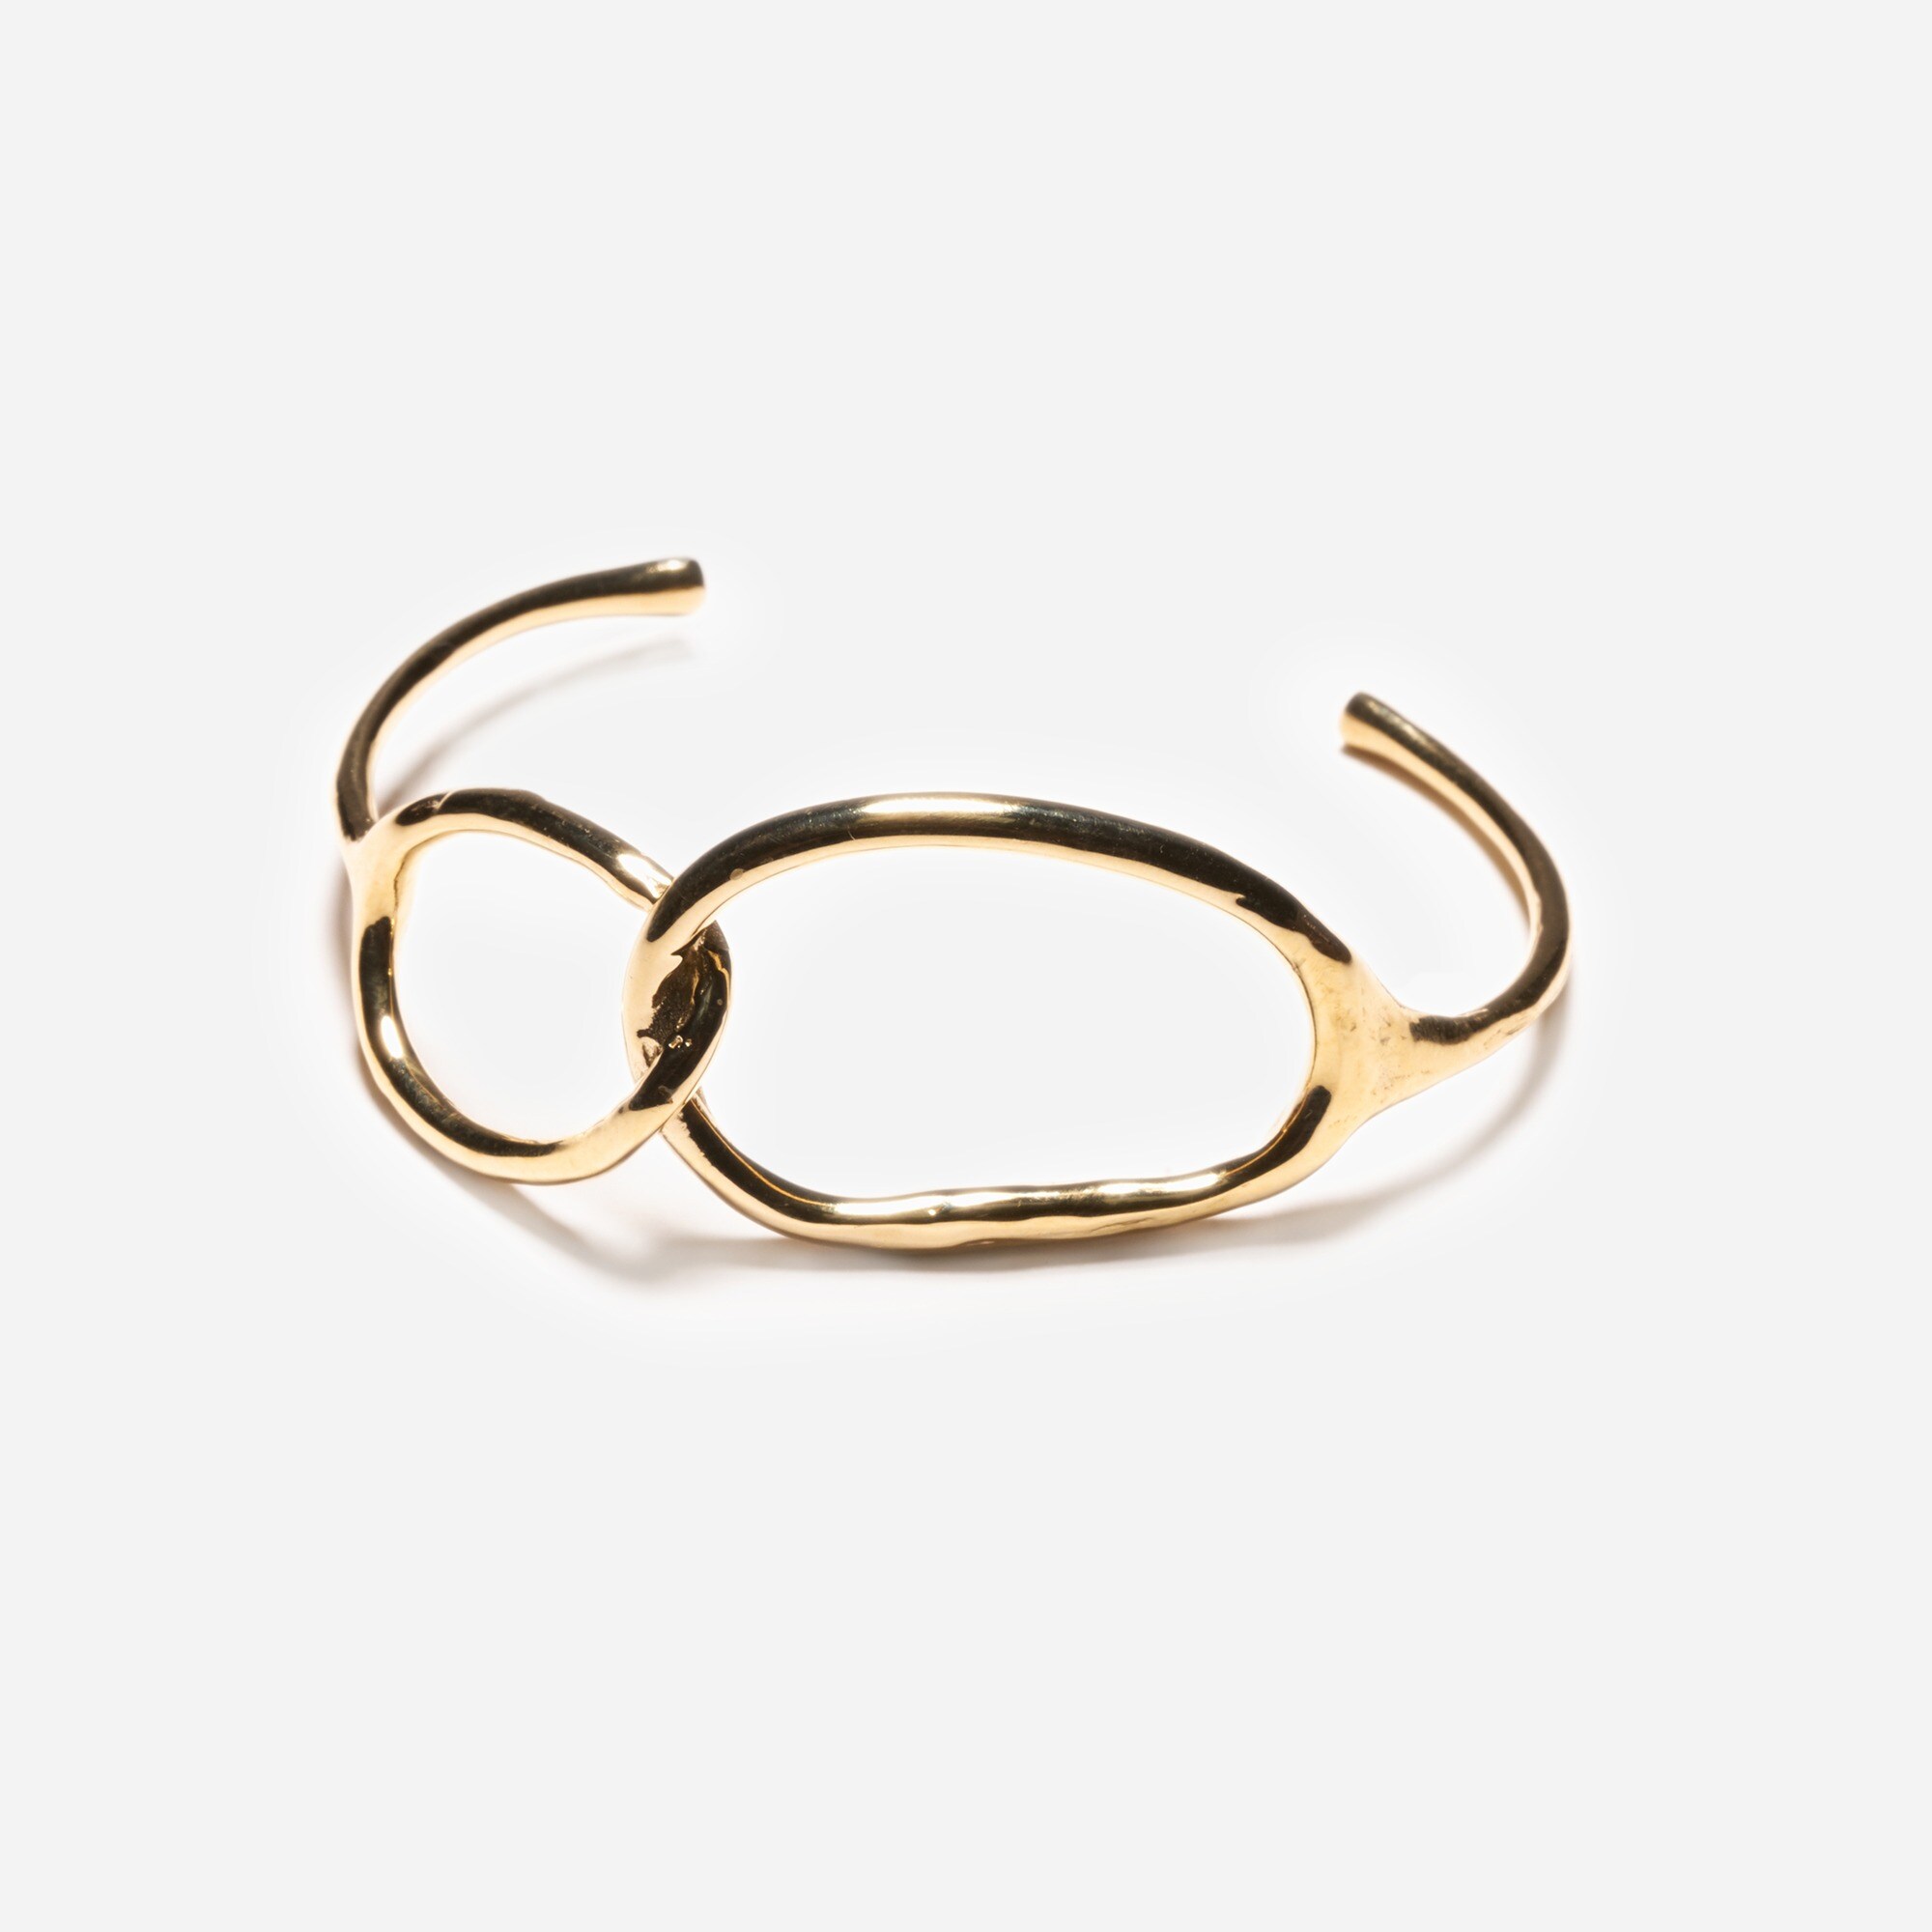  Odette New York®  Oblique cuff bracelet